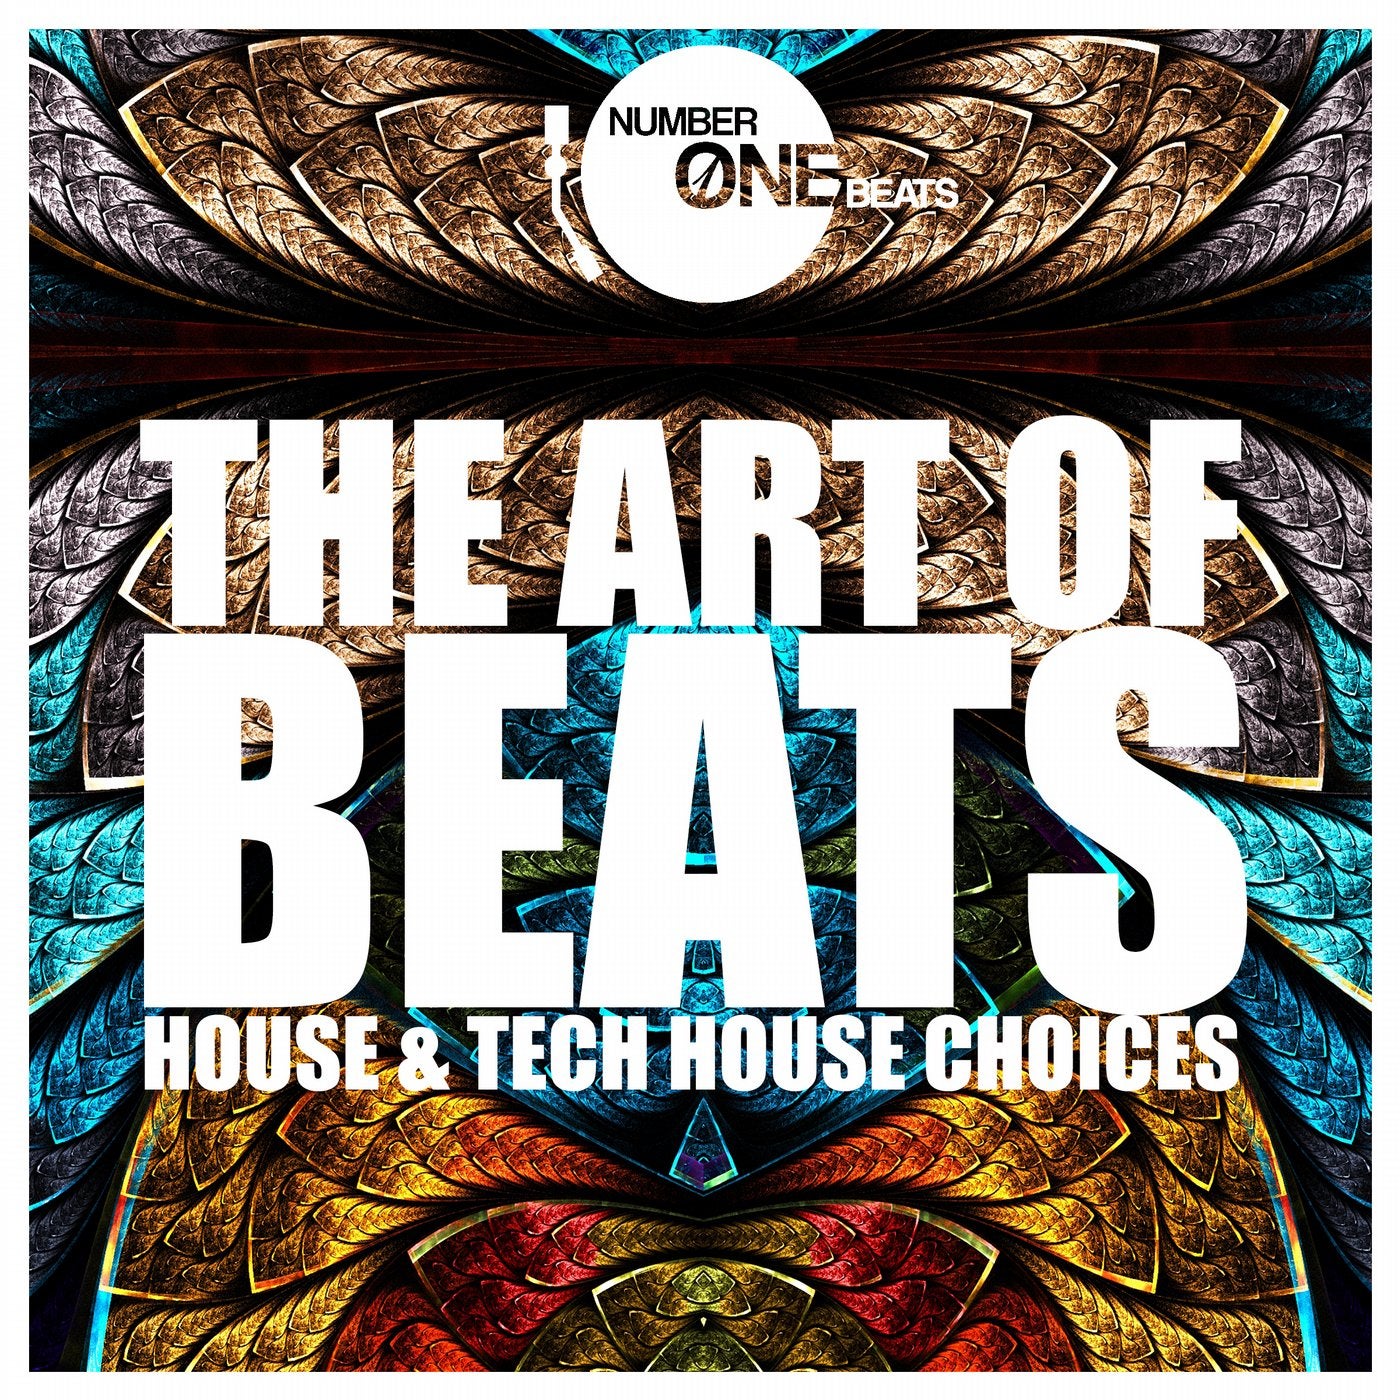 The Art of Beats (House & Tech House Choises)